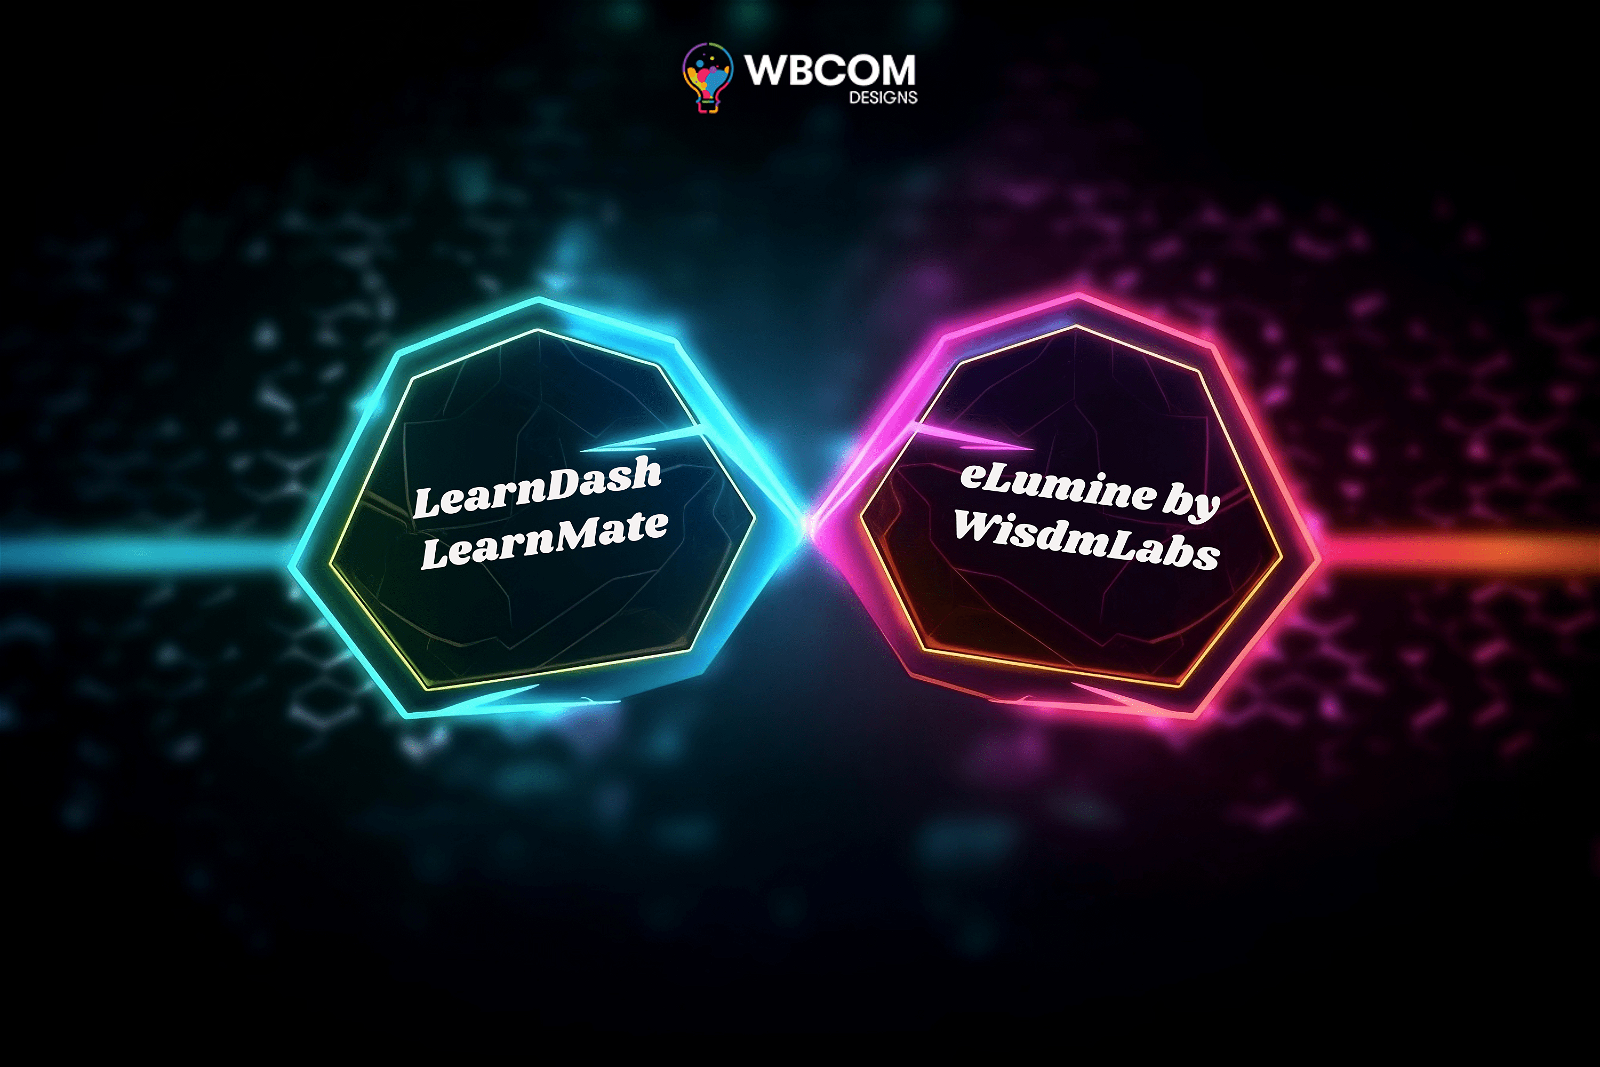 LearnDash LearnMate vs eLumine